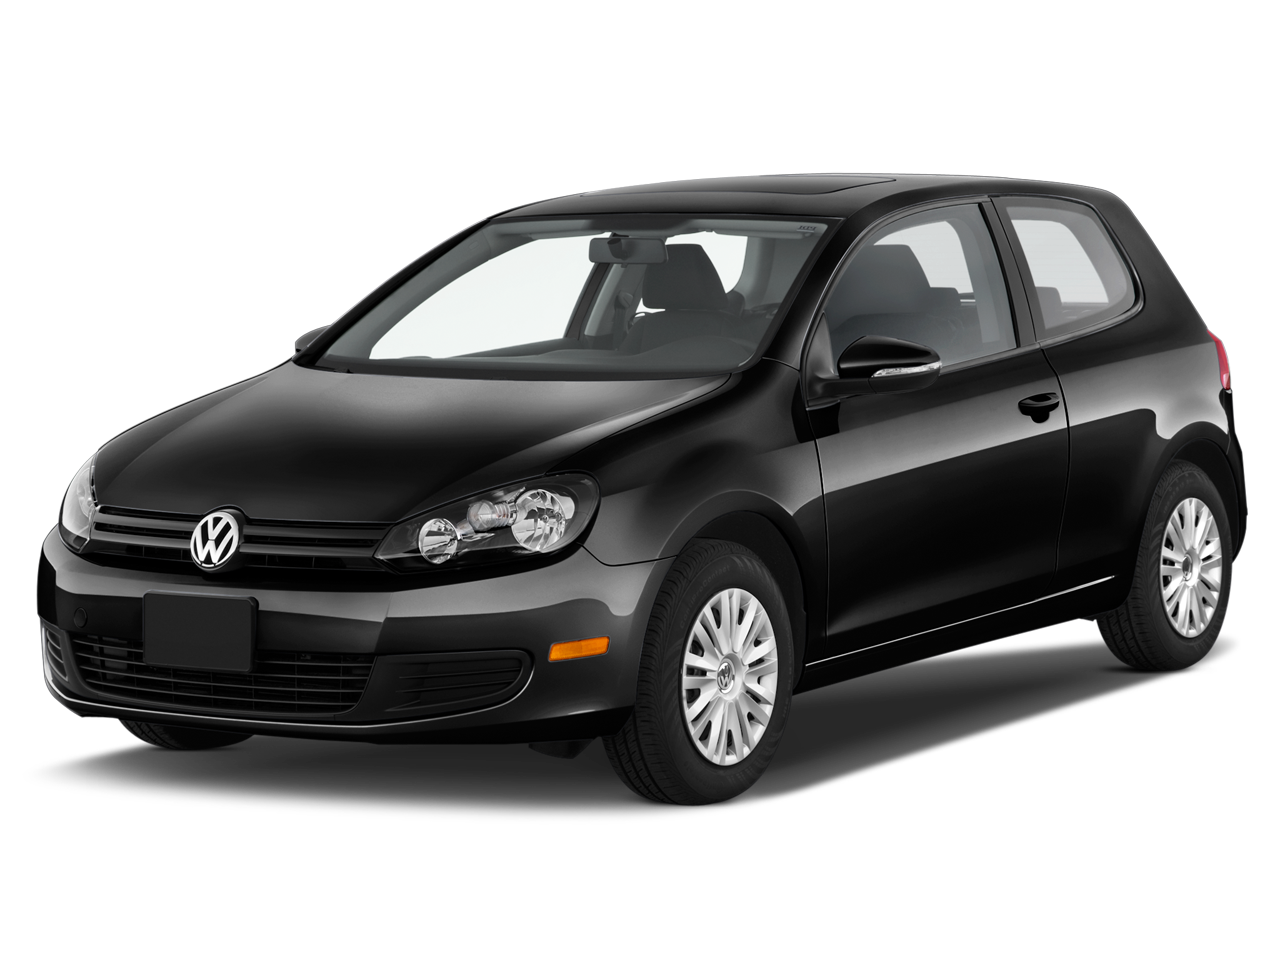 Black Volkswagen Car PNG HD Quality